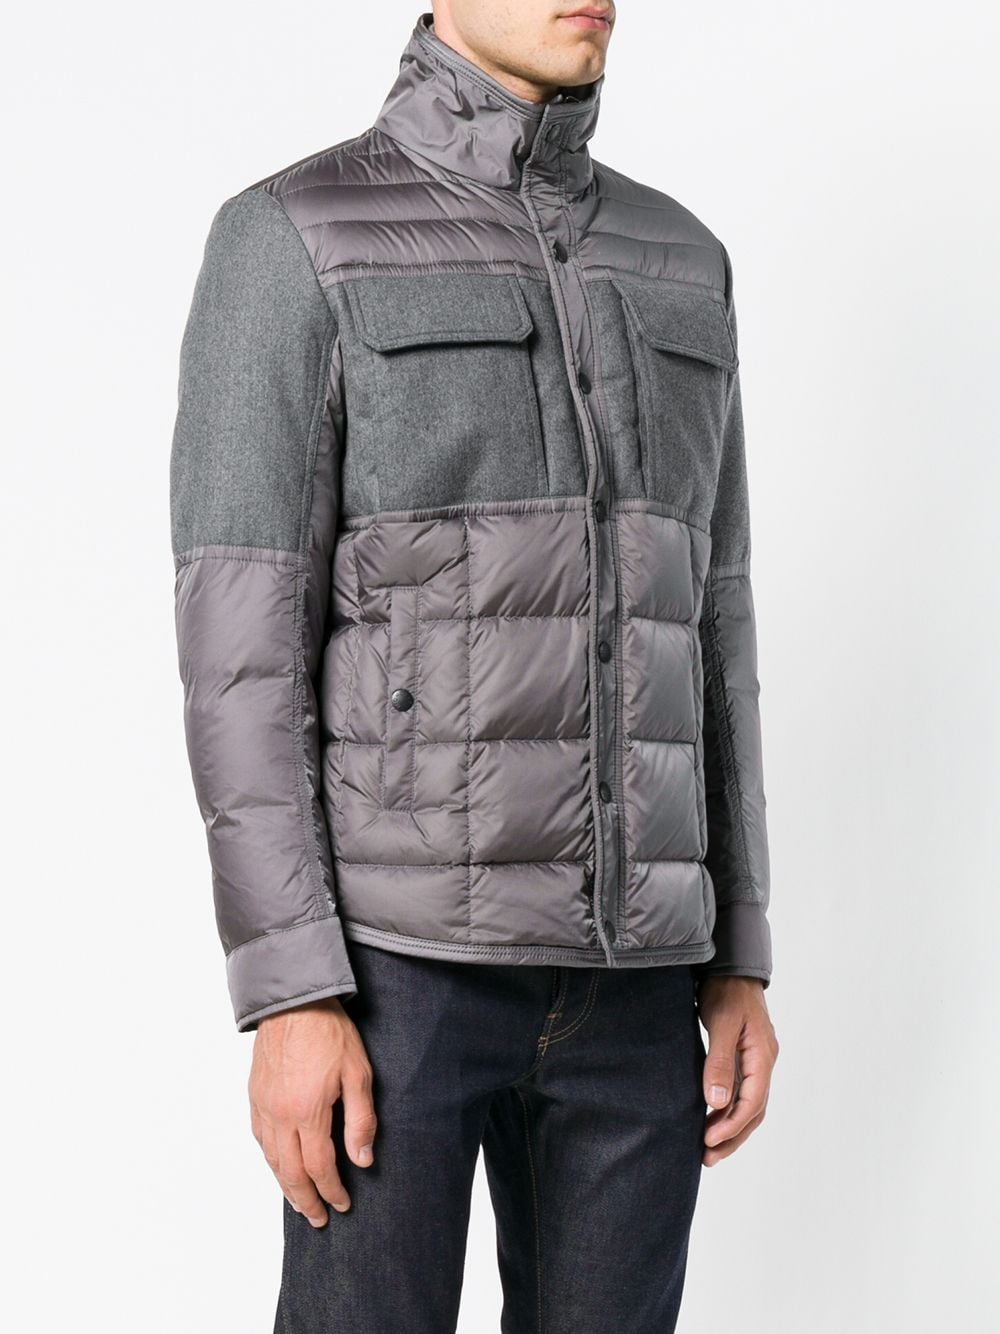 Moncler Albi jacket $1,200 - Shop AW18 